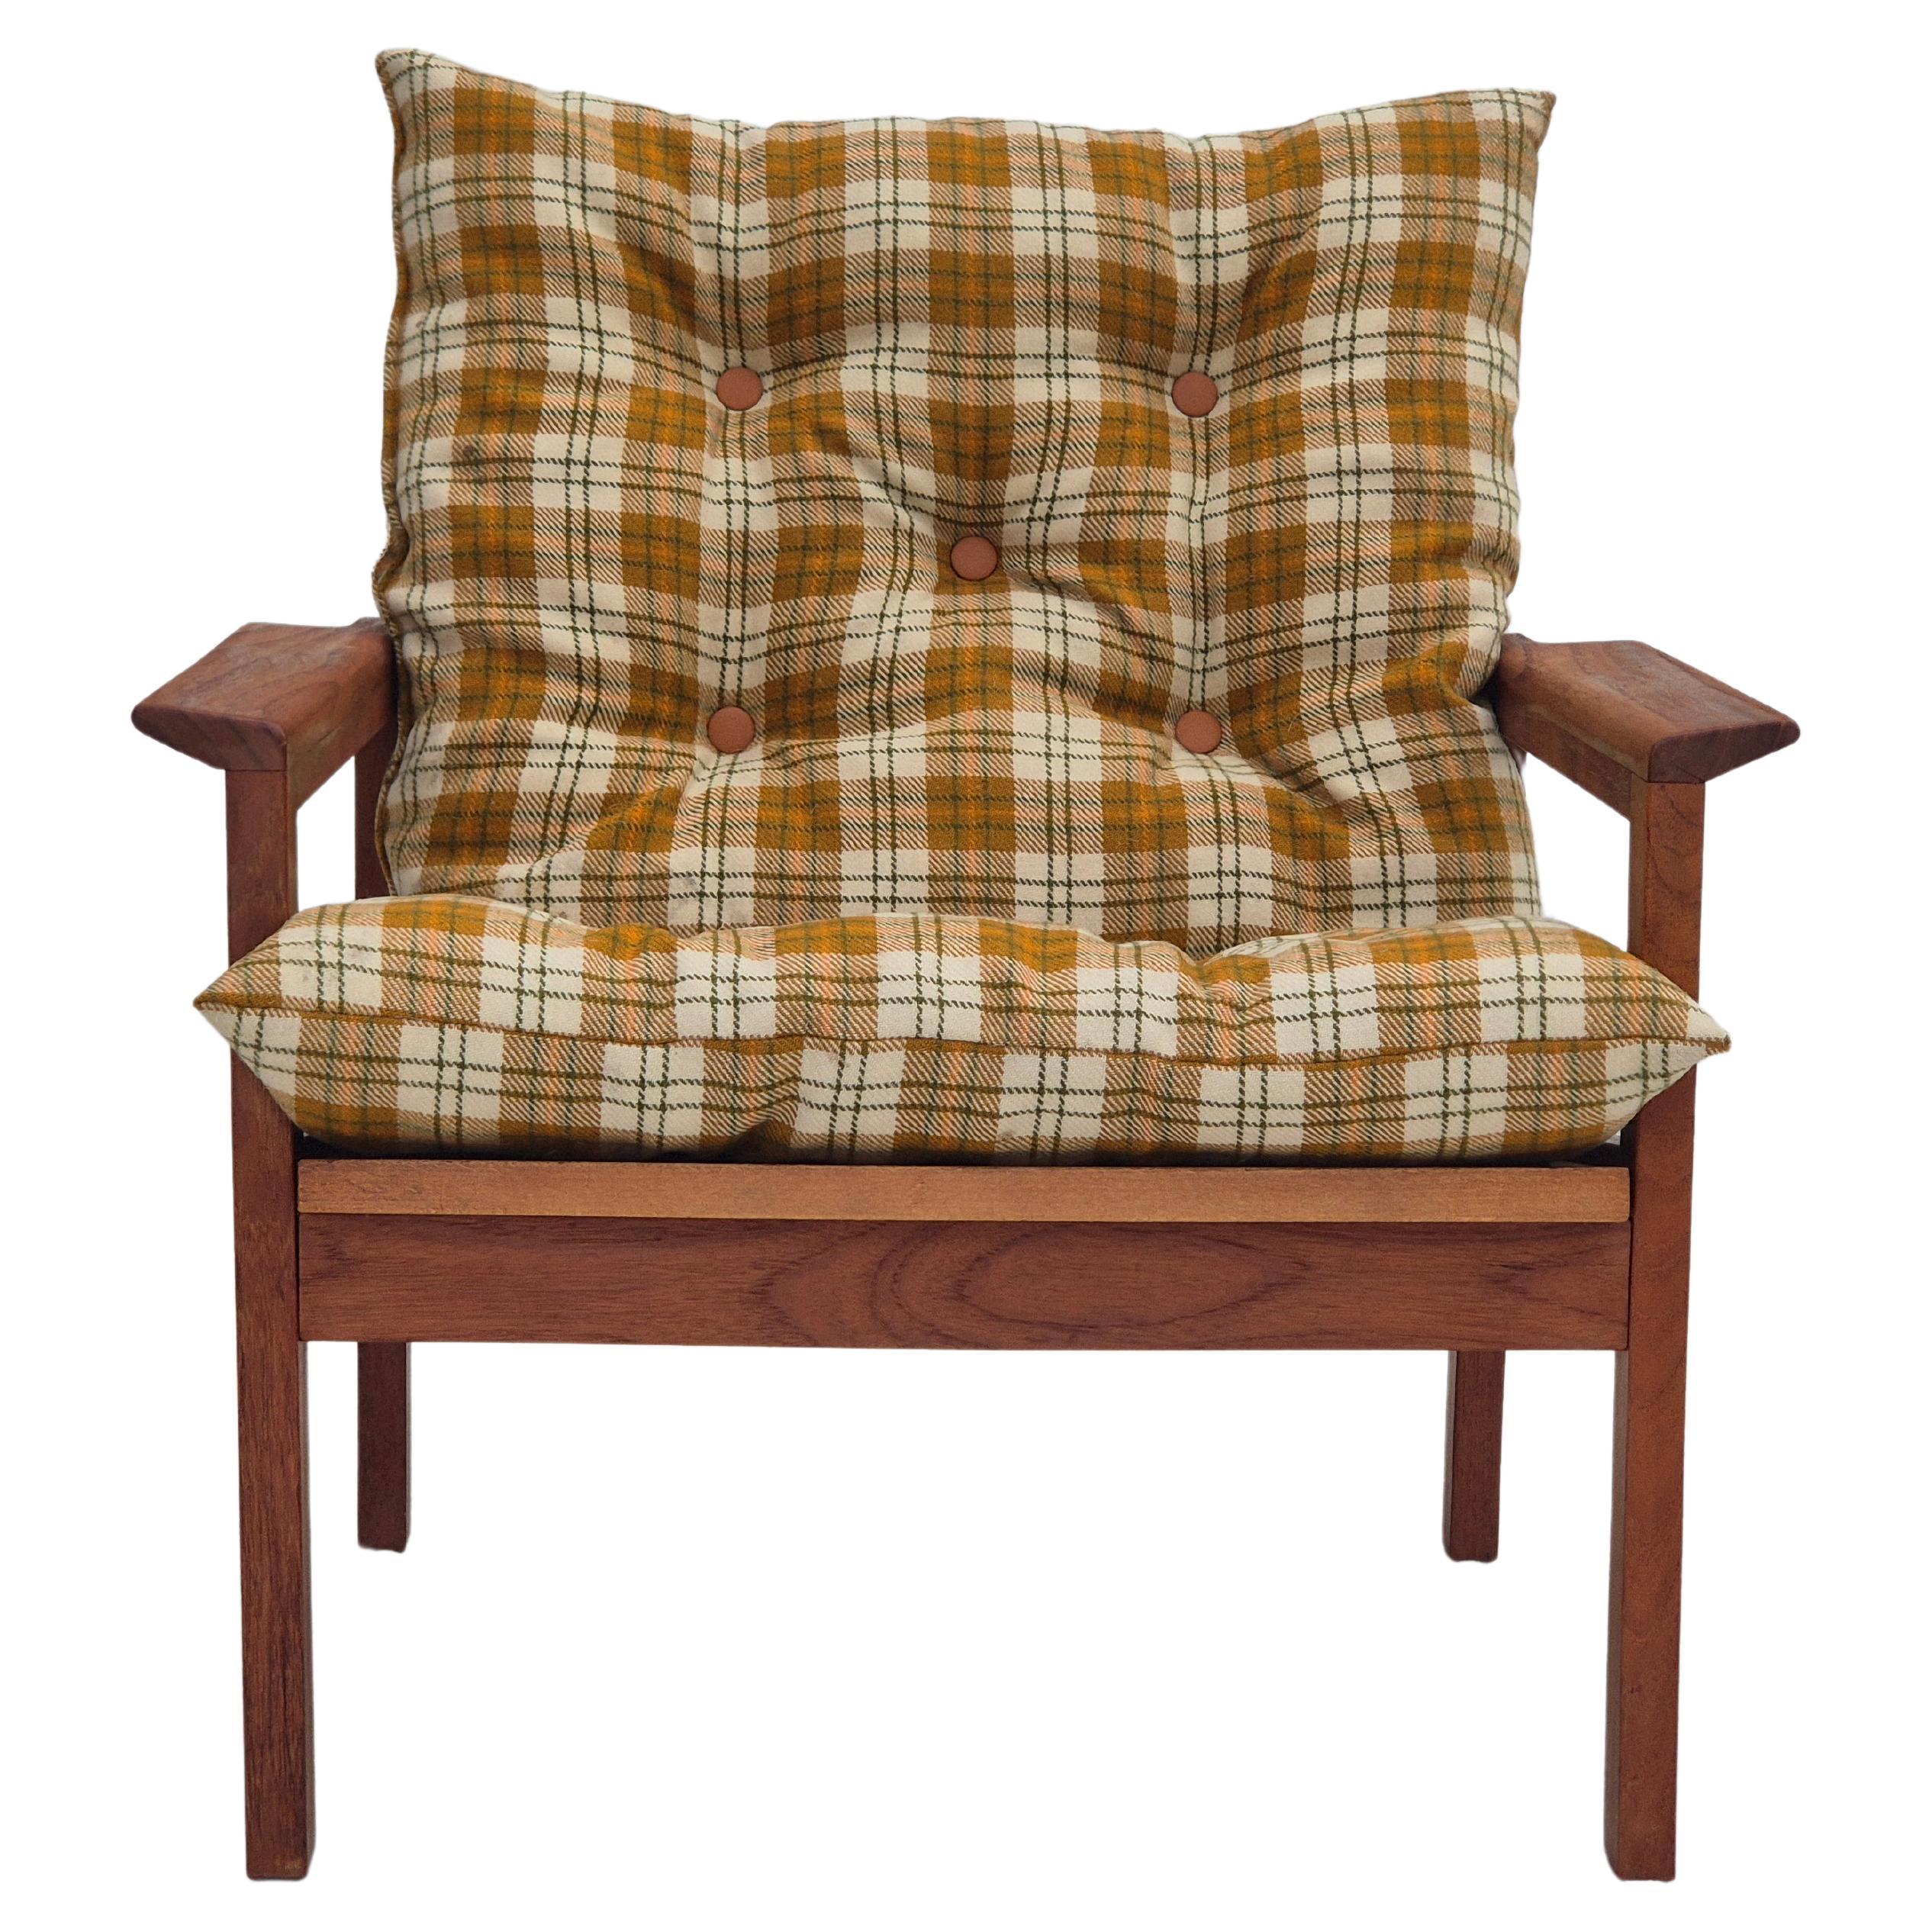 1970s, Danish lounge chair, original condition, furniture wool fabric, teak wood